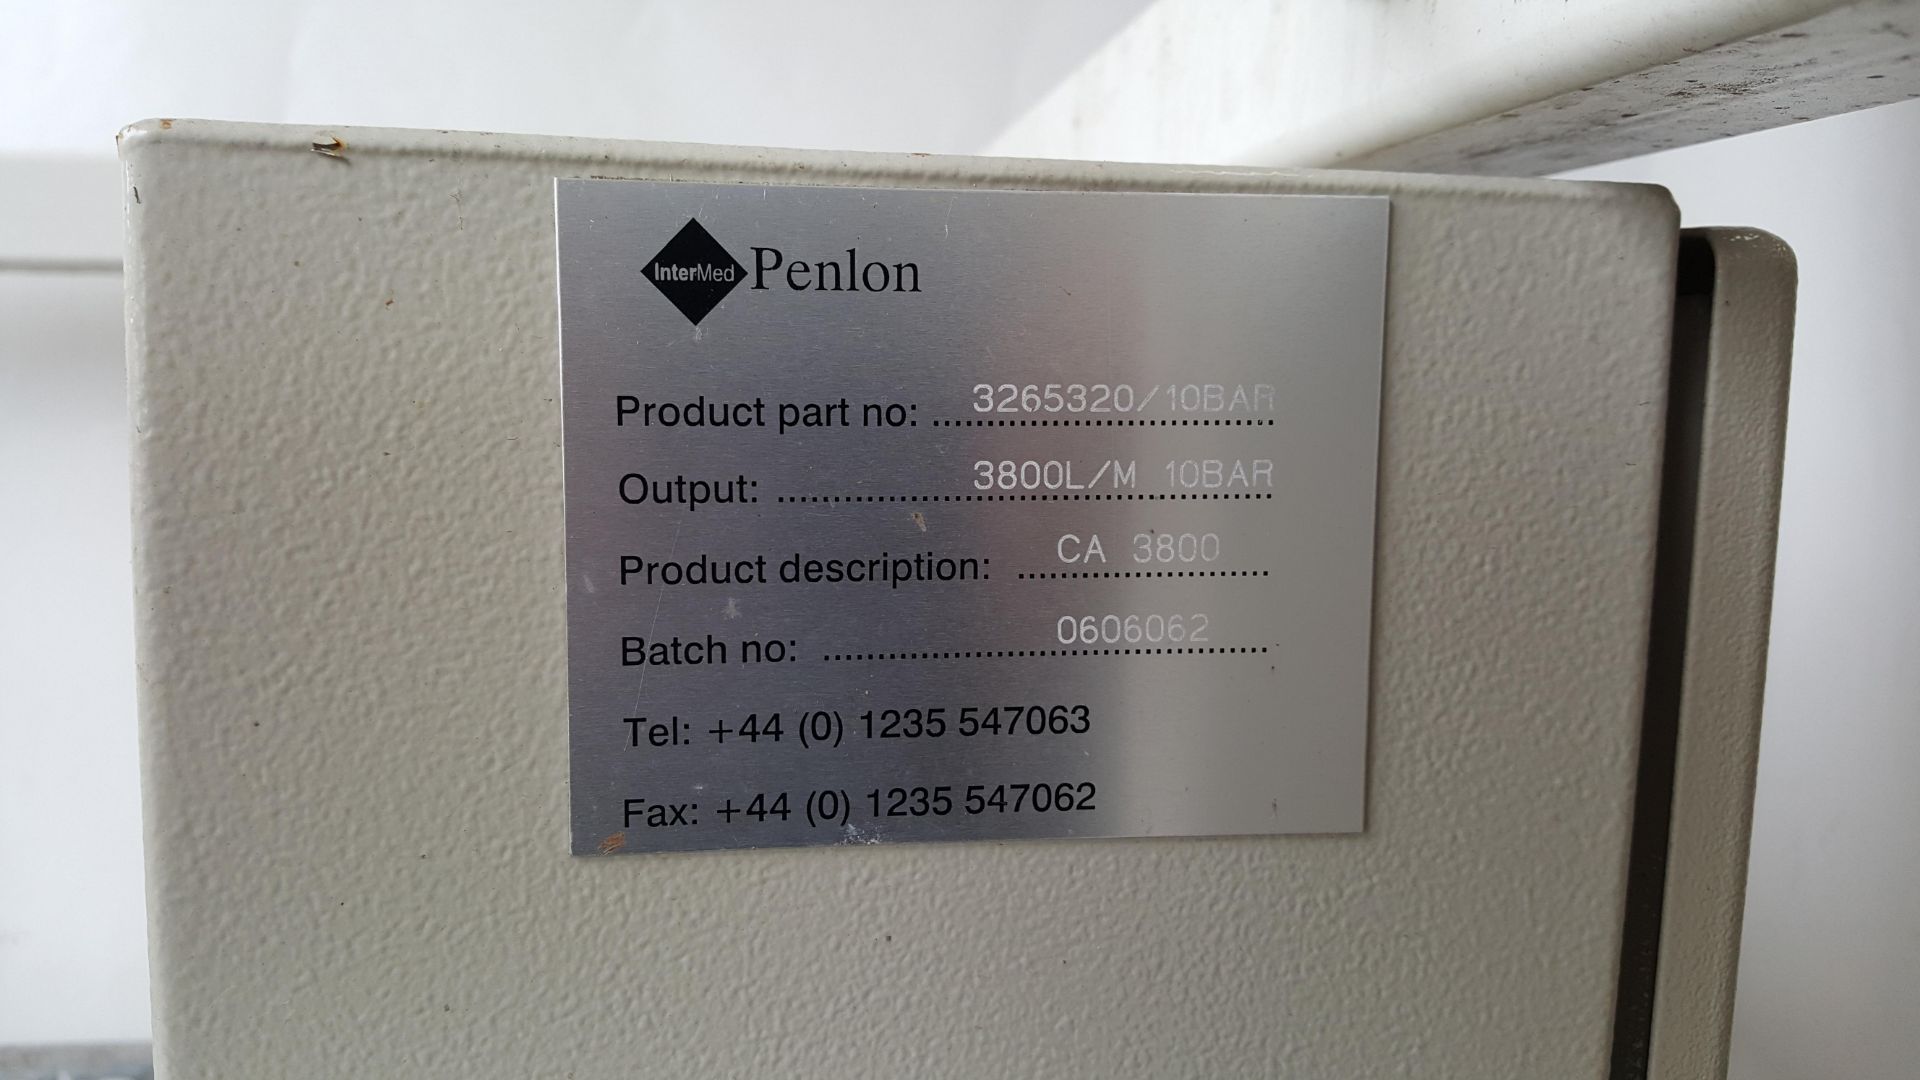 PENLON CA3800 skid mounted Ventilation system - Image 5 of 5